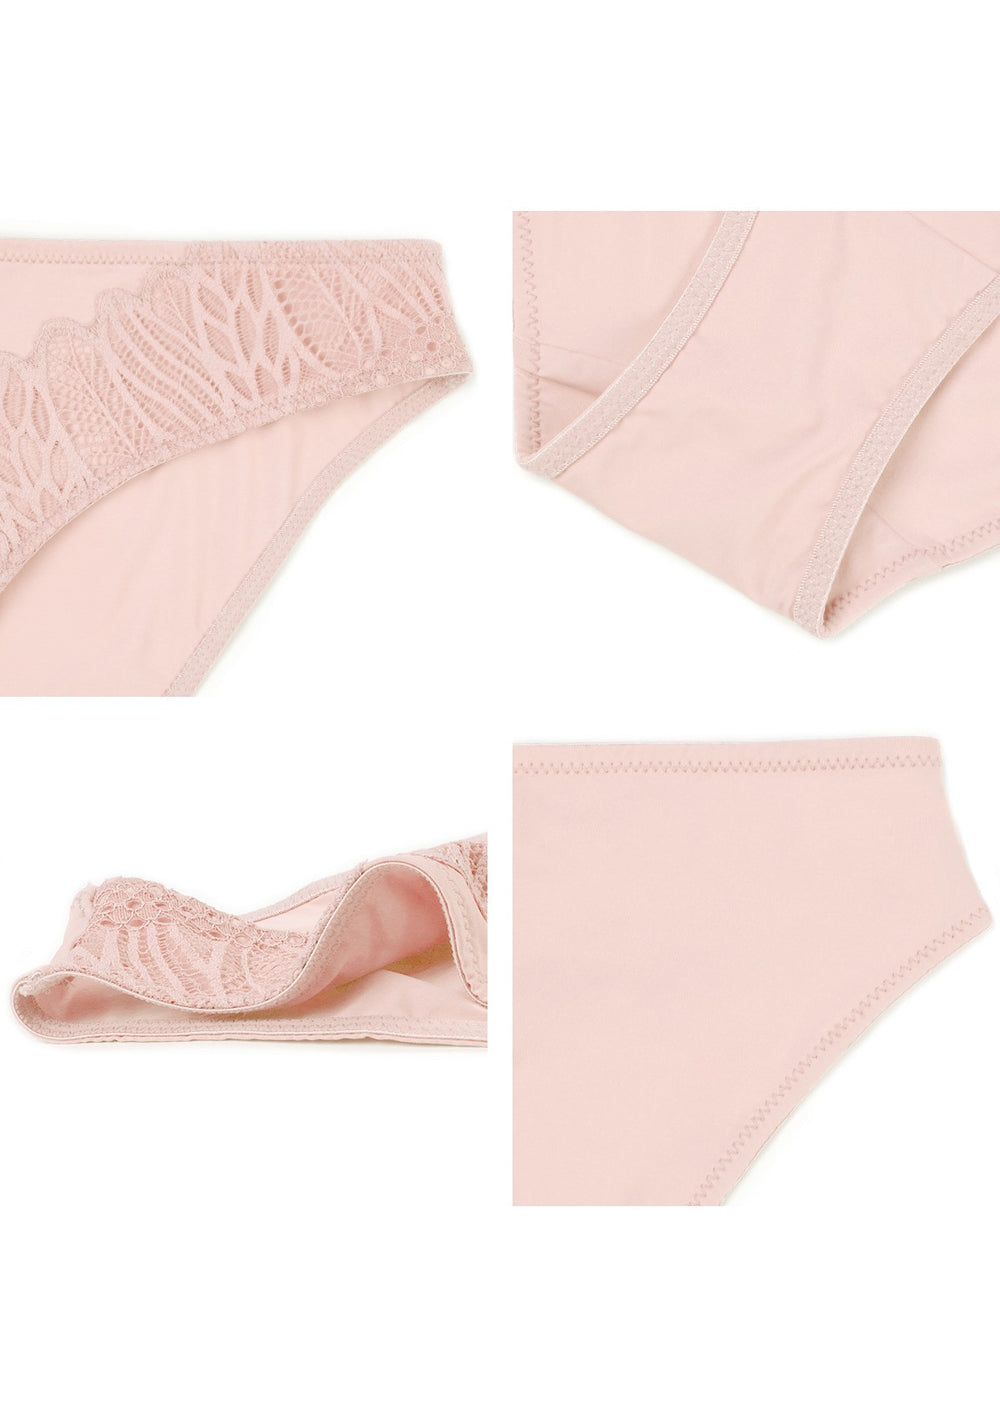 HSIA Pretty Secrets Cozy Stylish Lace Trim Feminine Modern Underwear